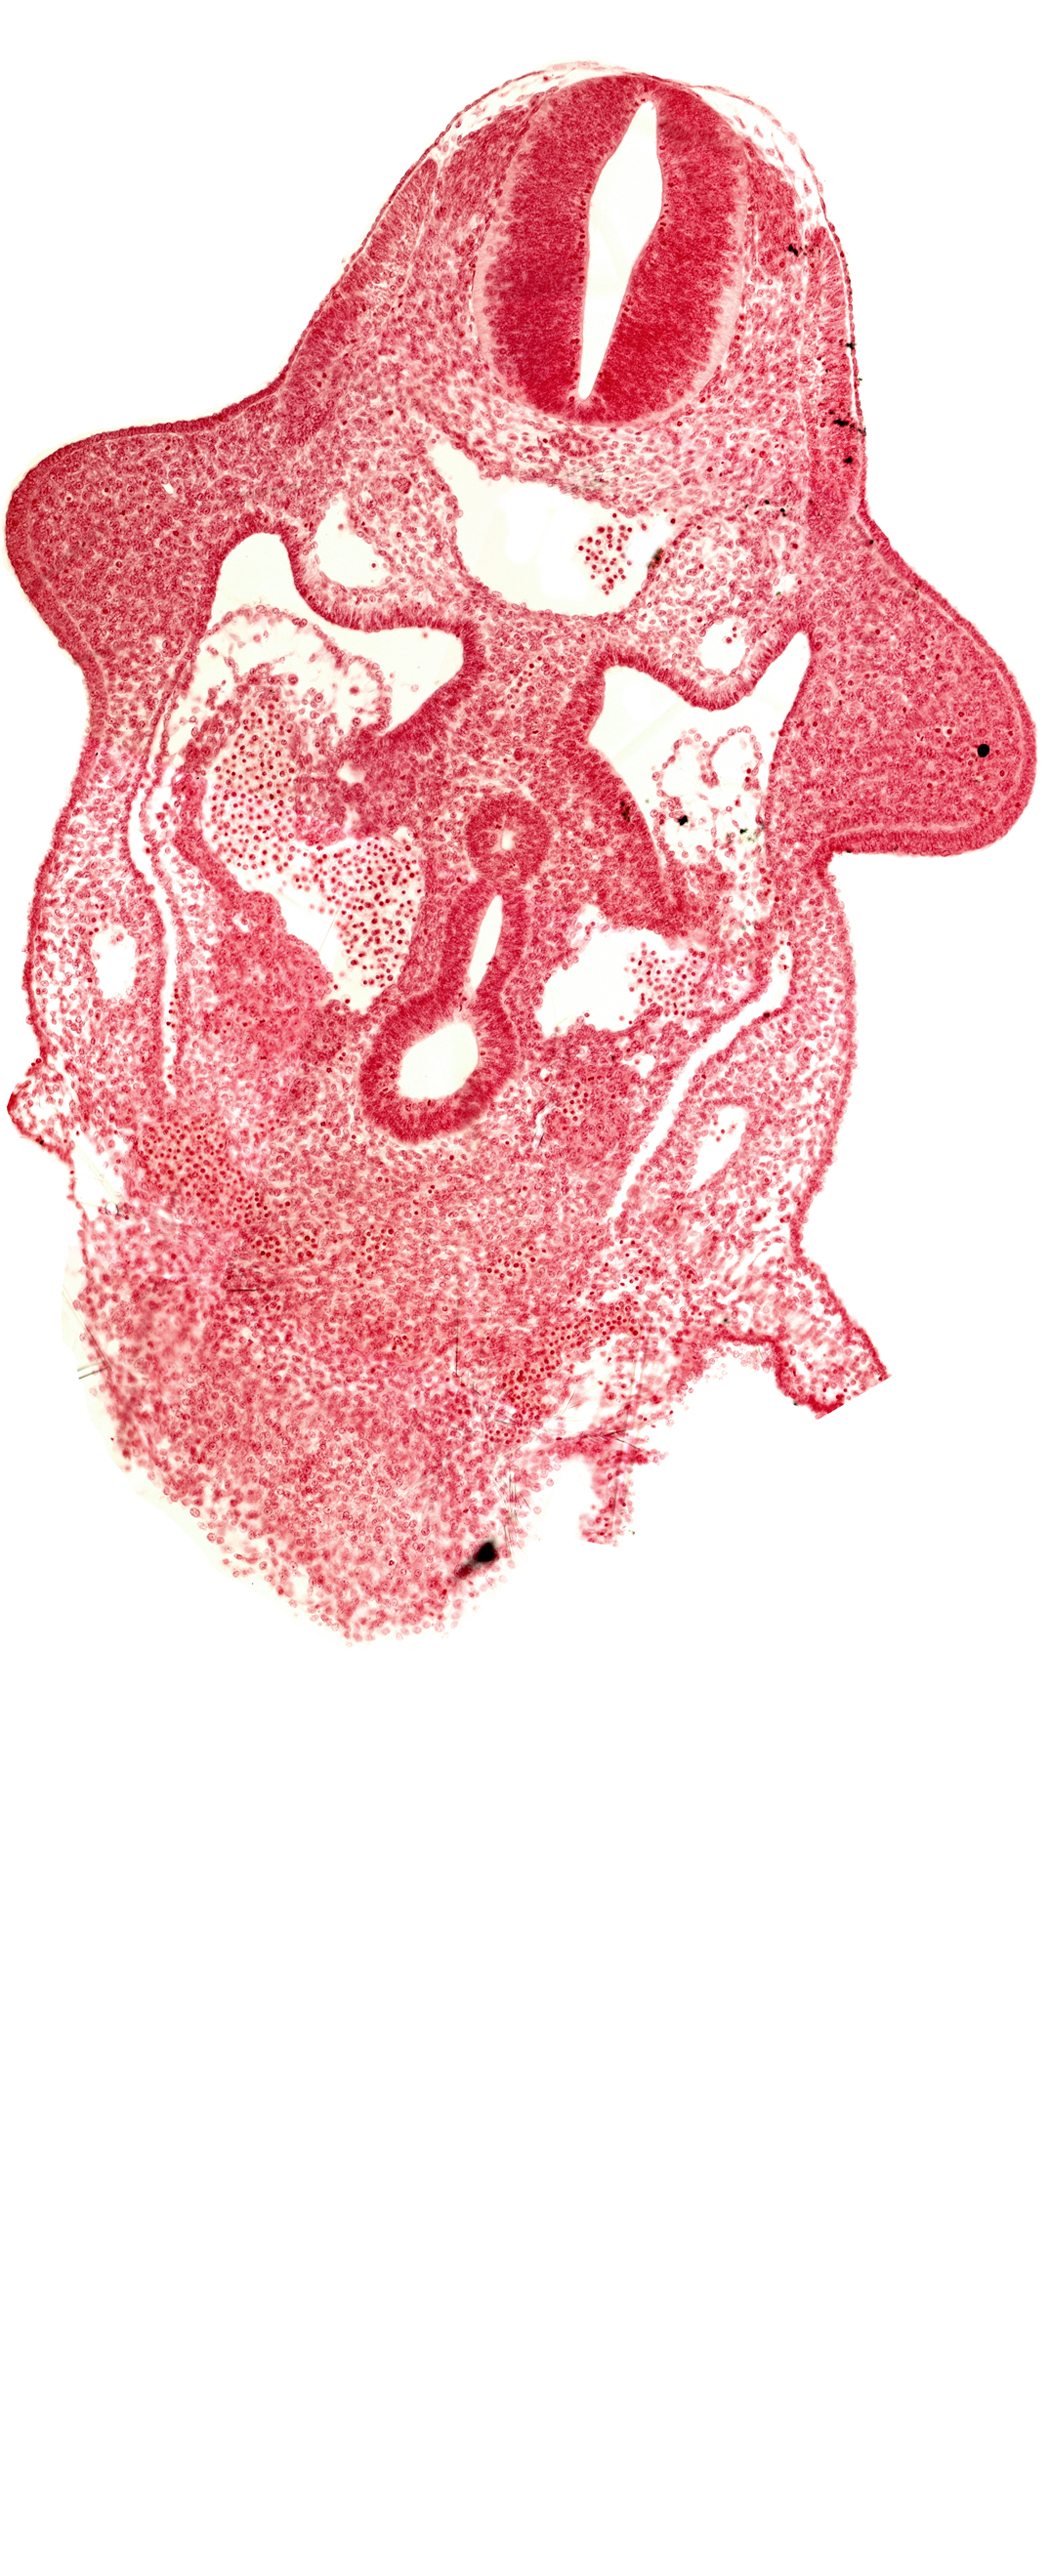 amnion attachment, aorta, caudal edge of common ventricle, dermatomyotome 9 (C-5), dorsal intersegmental artery, dorsal pancreatic bud, hepatic antrum, left hepatocardiac vein, notochord, postcardinal vein, right hepatocardiac vein, specialized coelomic wall, upper limb bud